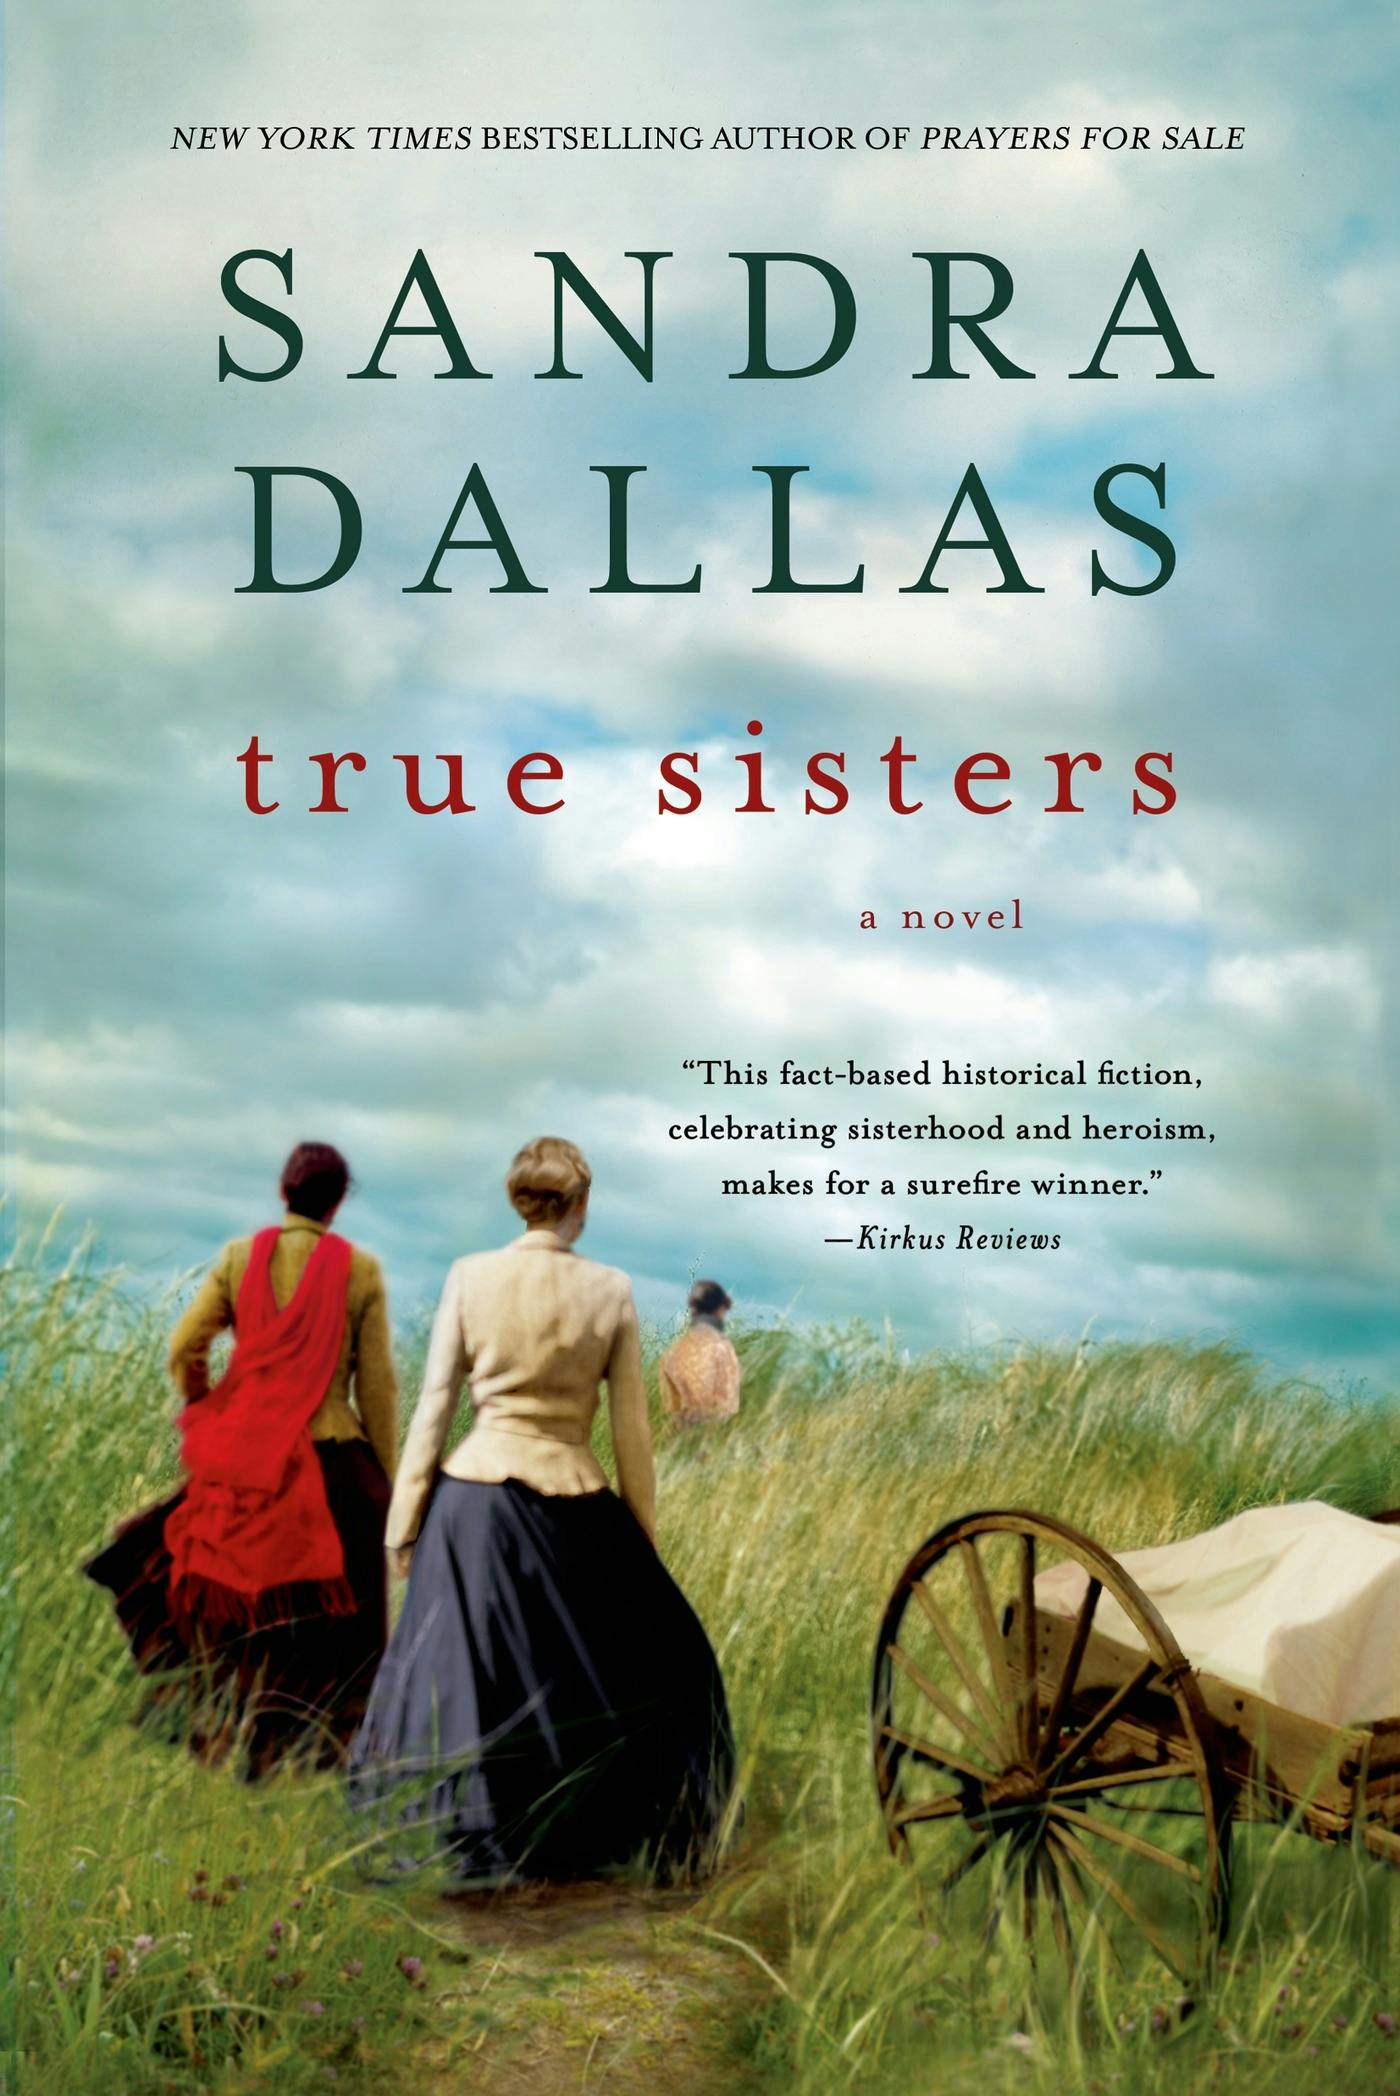 Novel based. True sisters. The novel. True author.